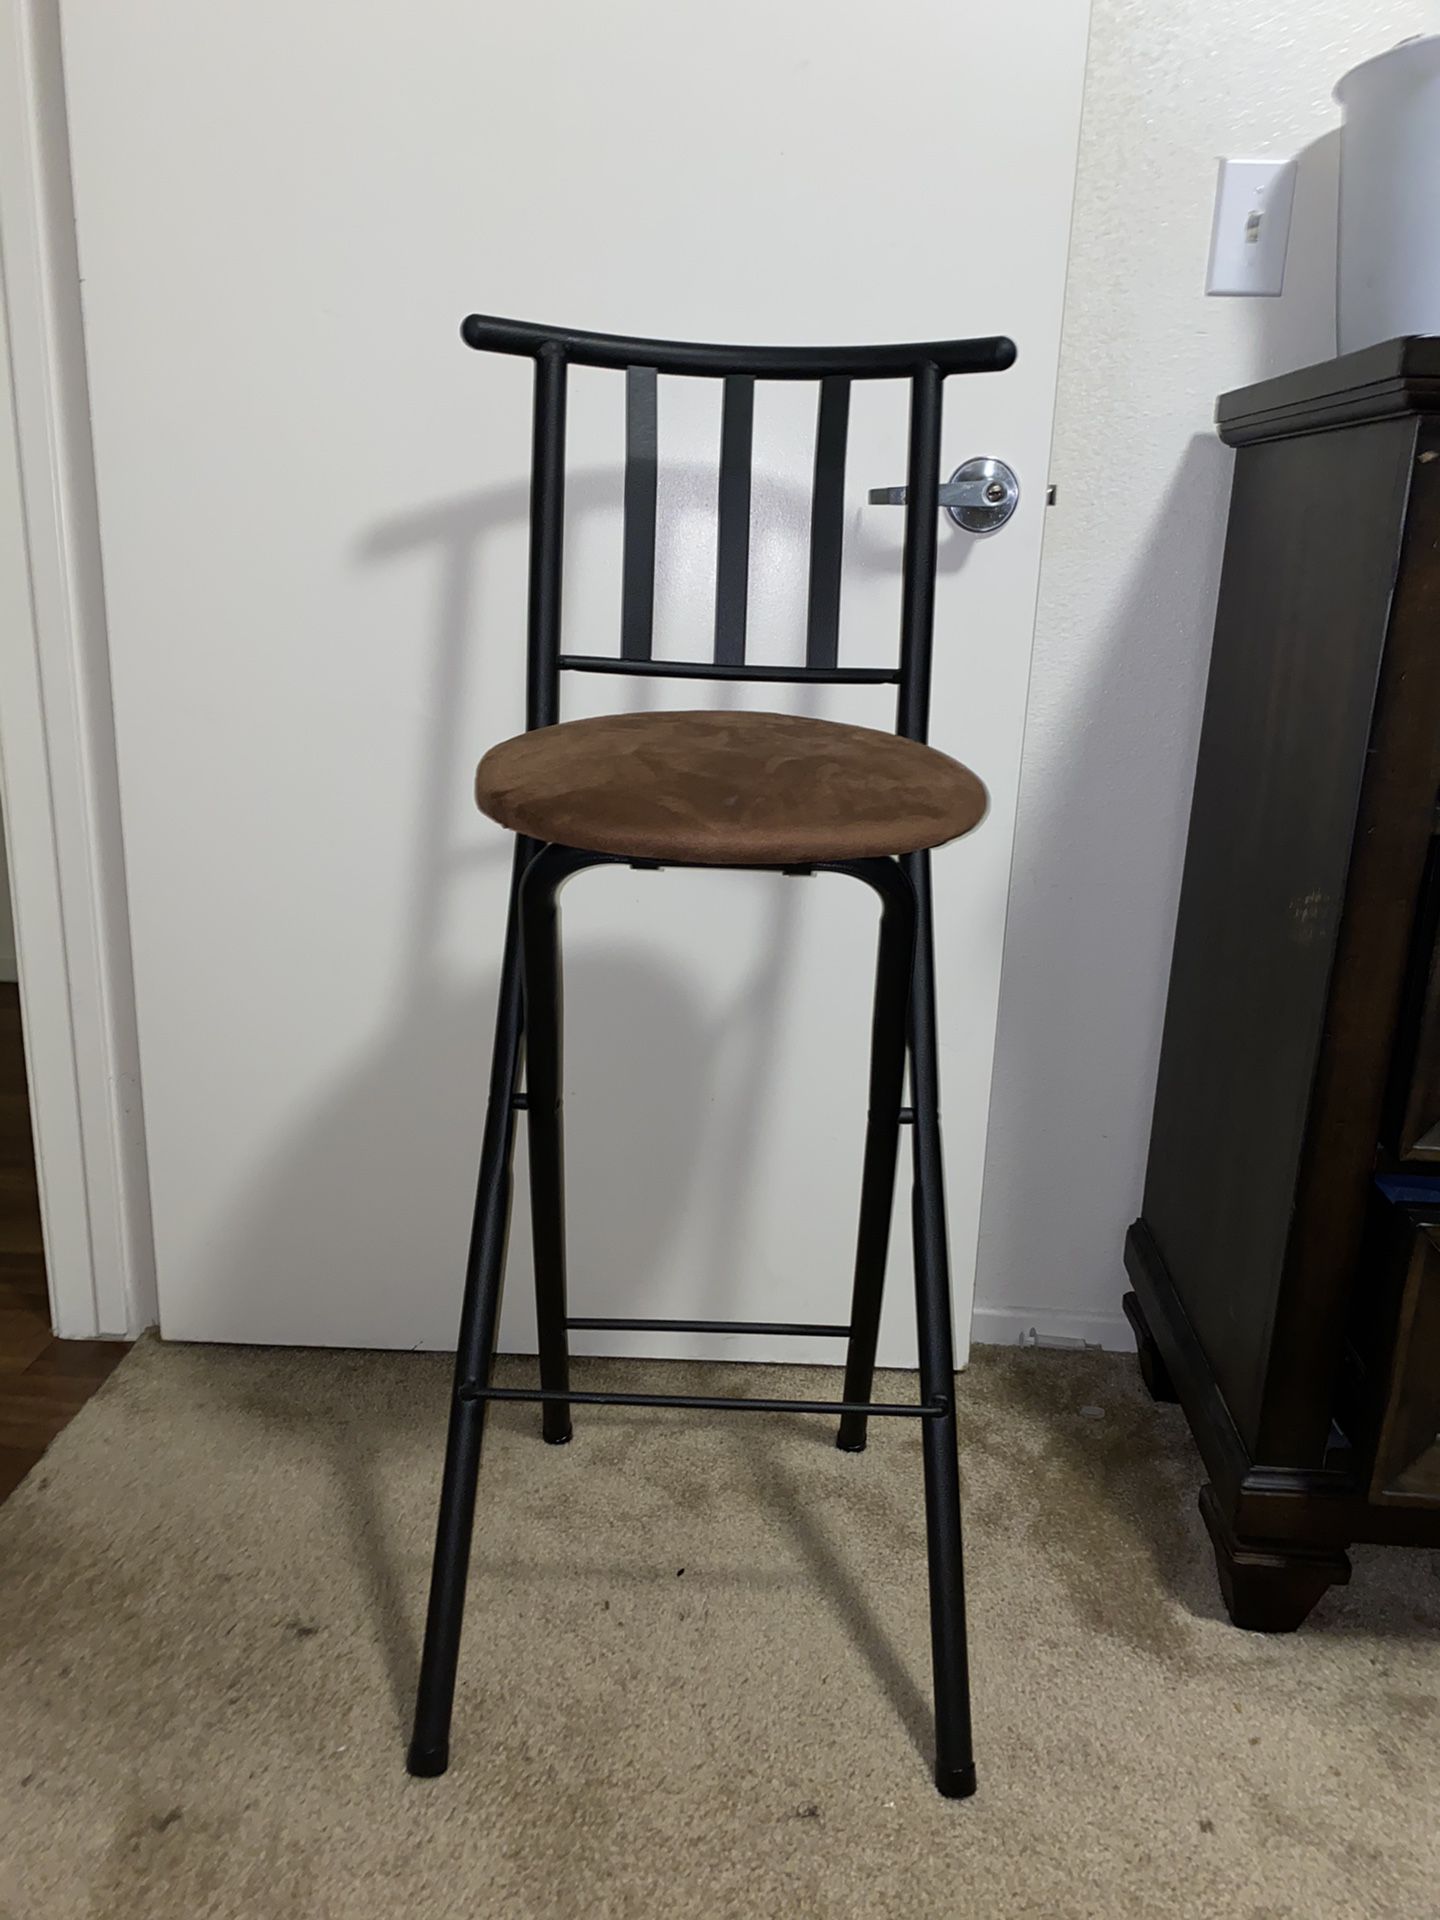 Tall Folding Chair